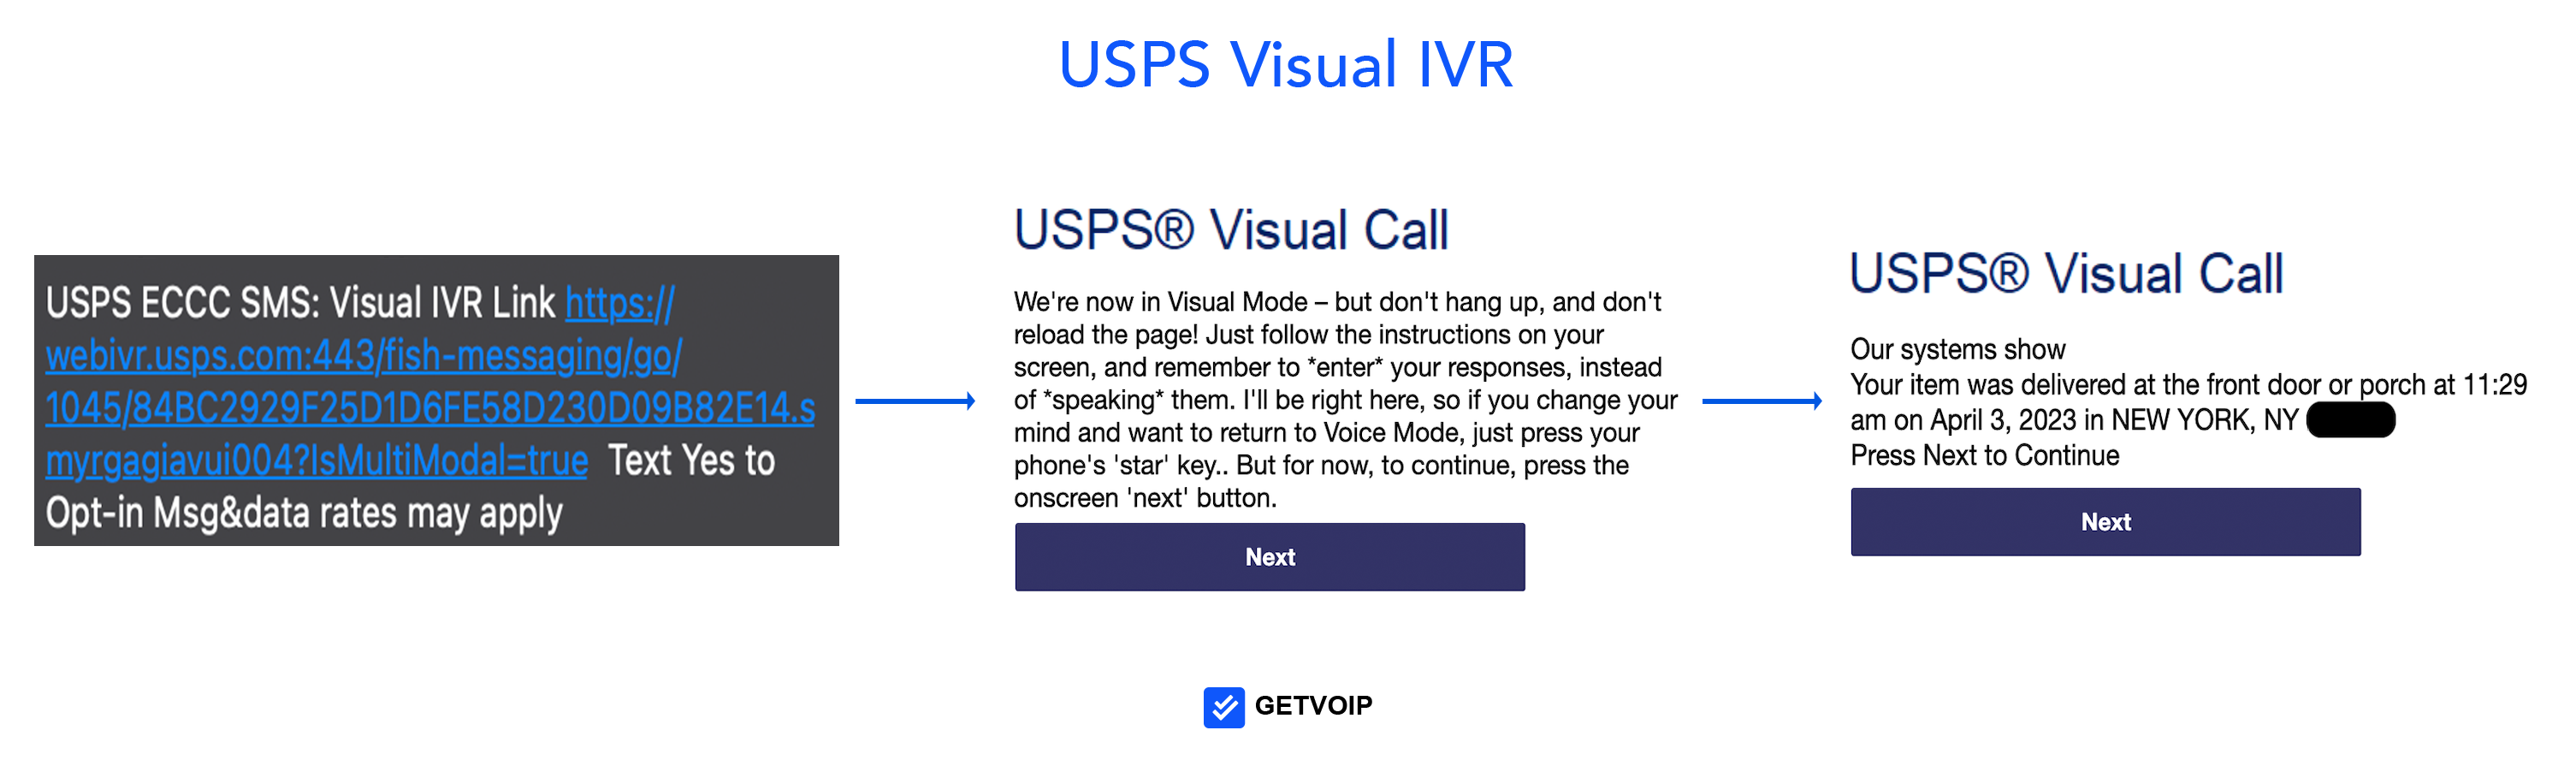 USPS visual IVR